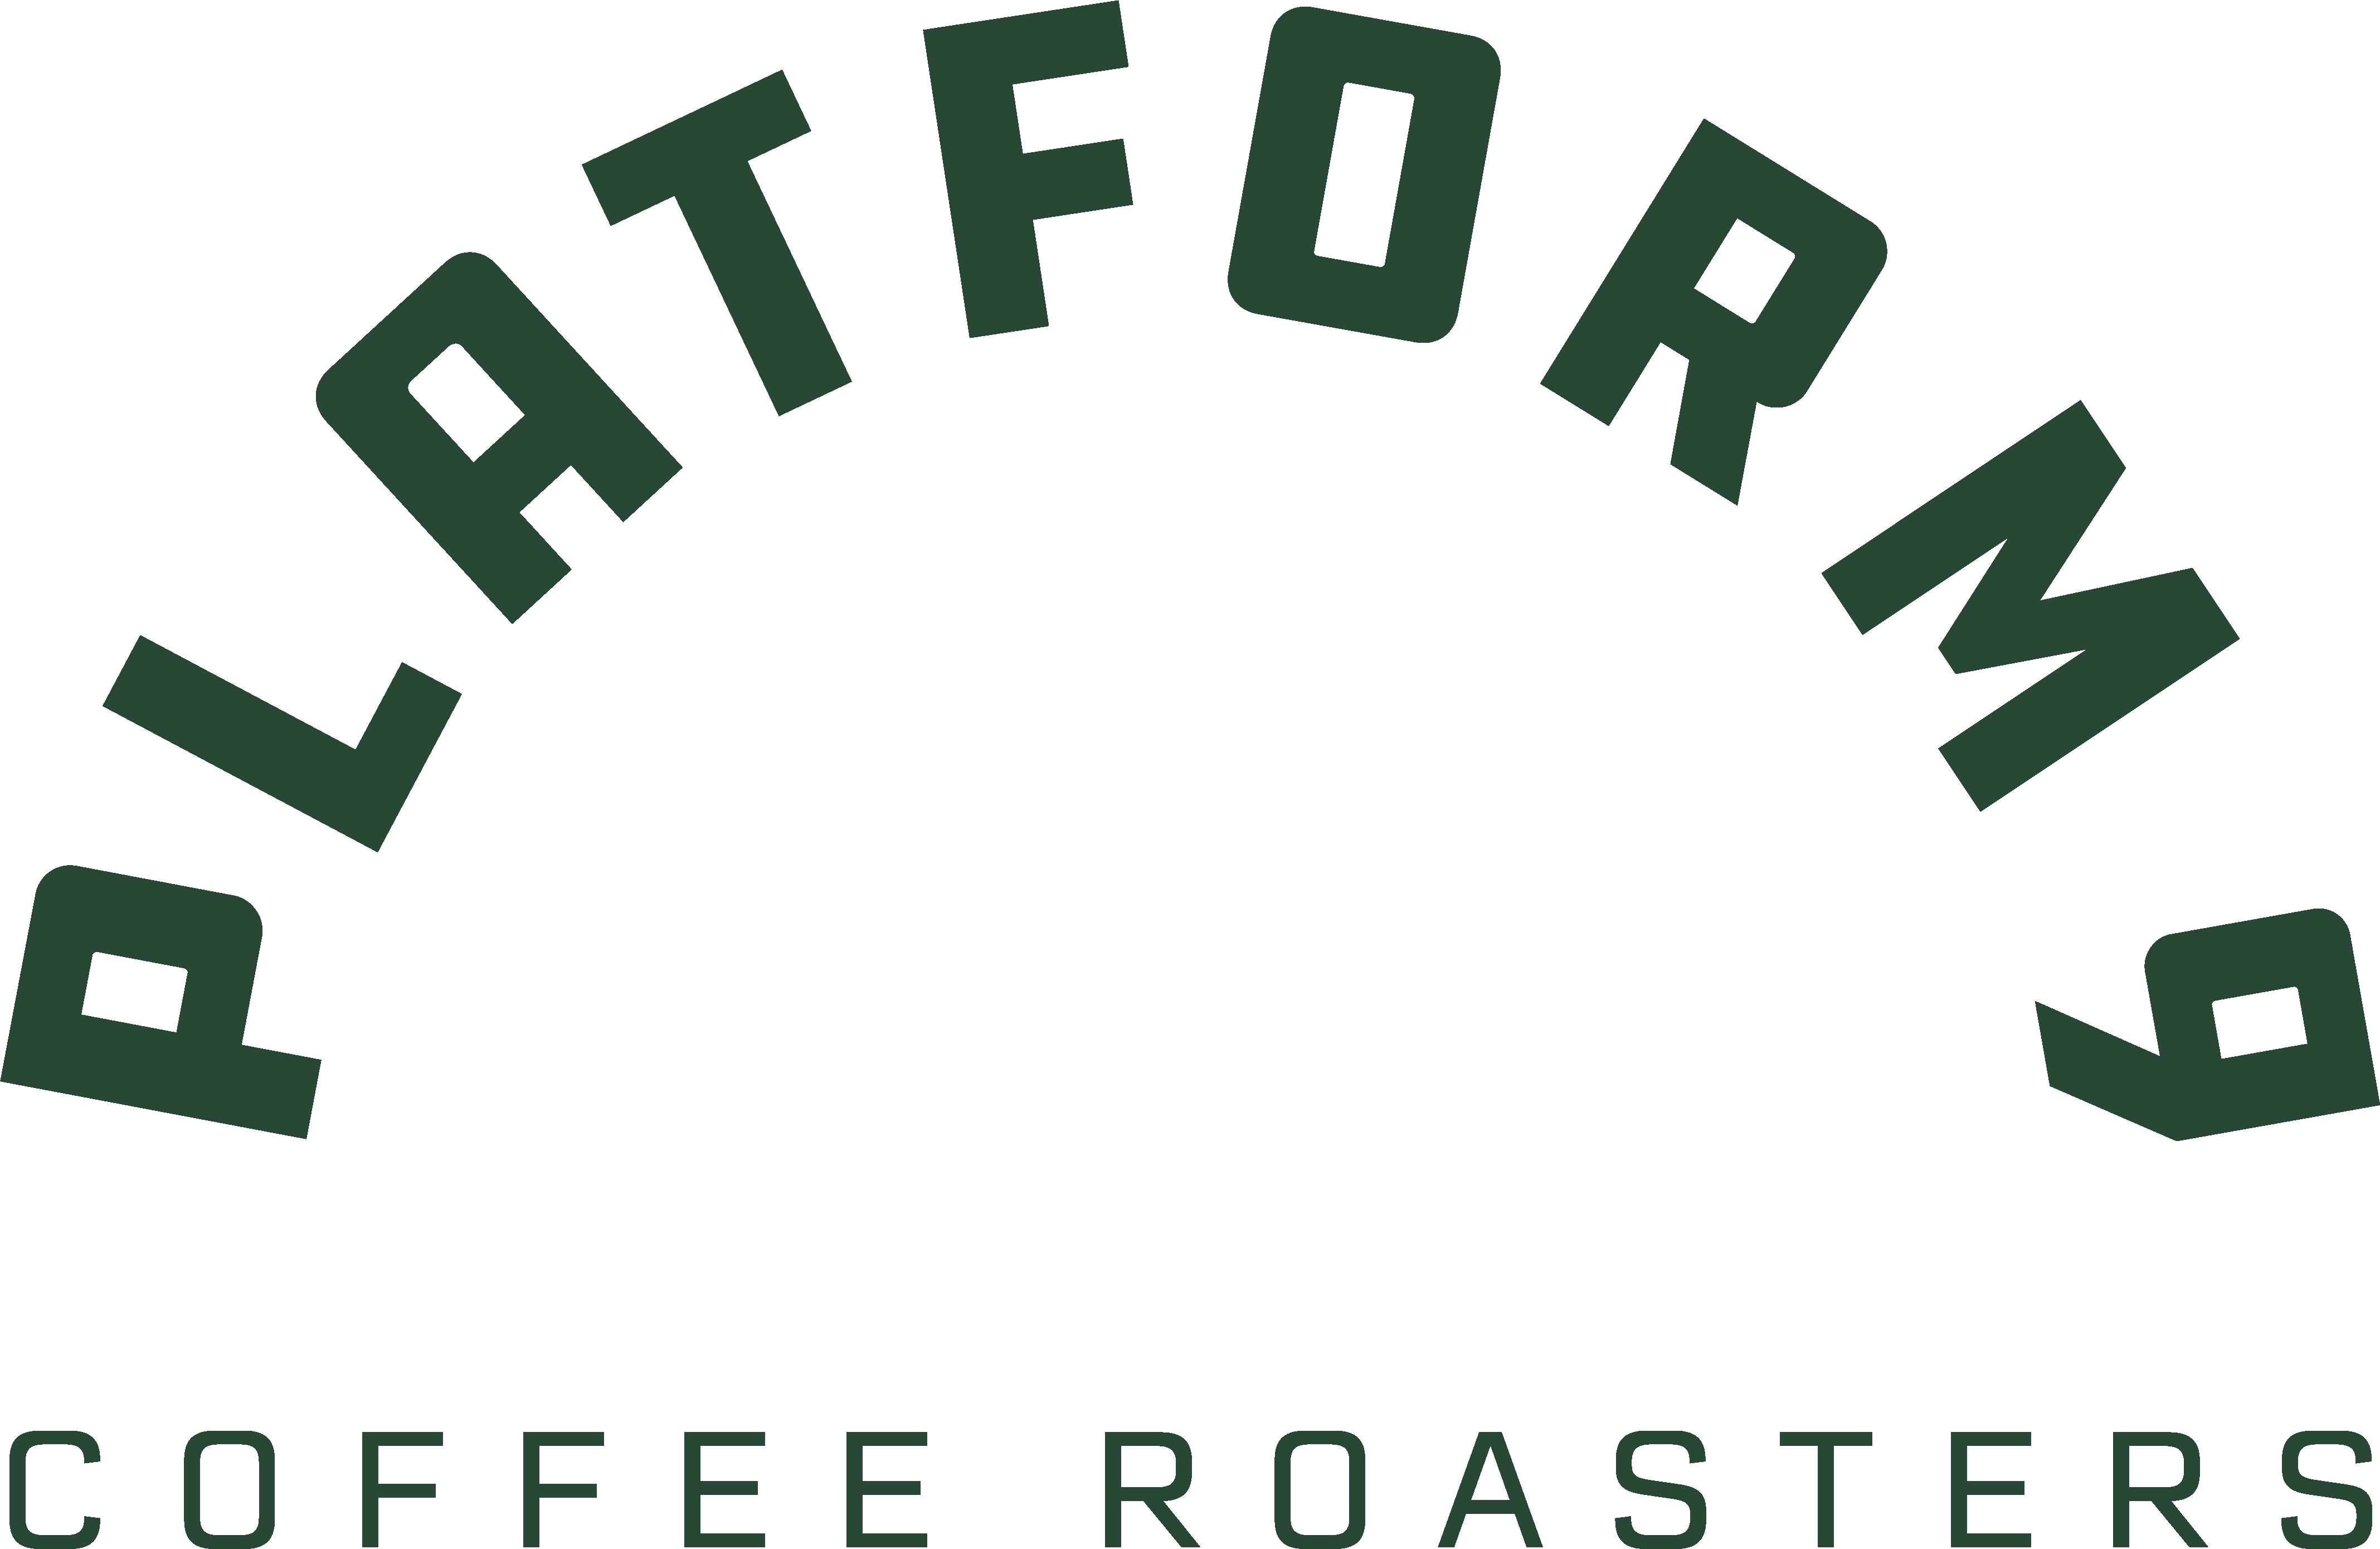 Platform 9 Coffee Roasters